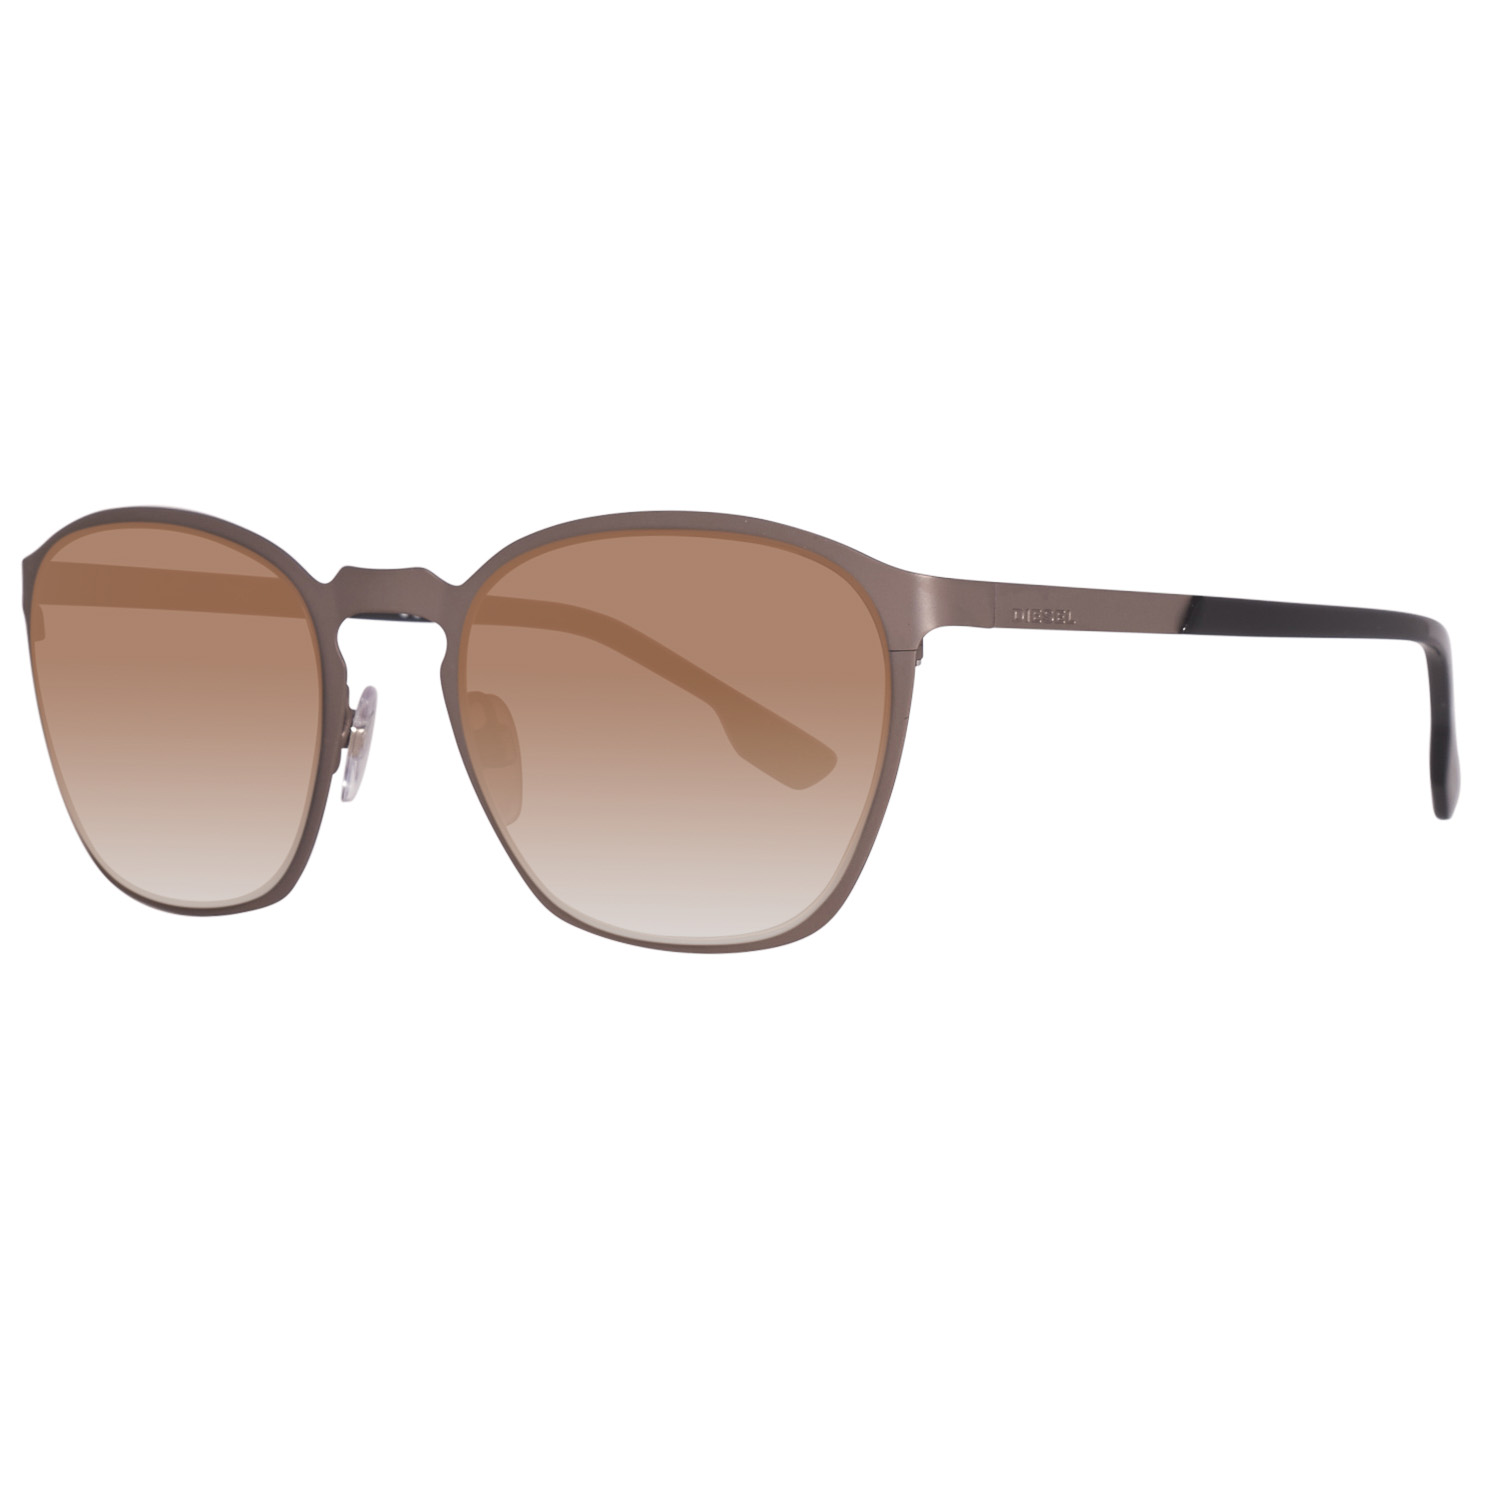 Diesel Sunglasses DL0153 09G 54